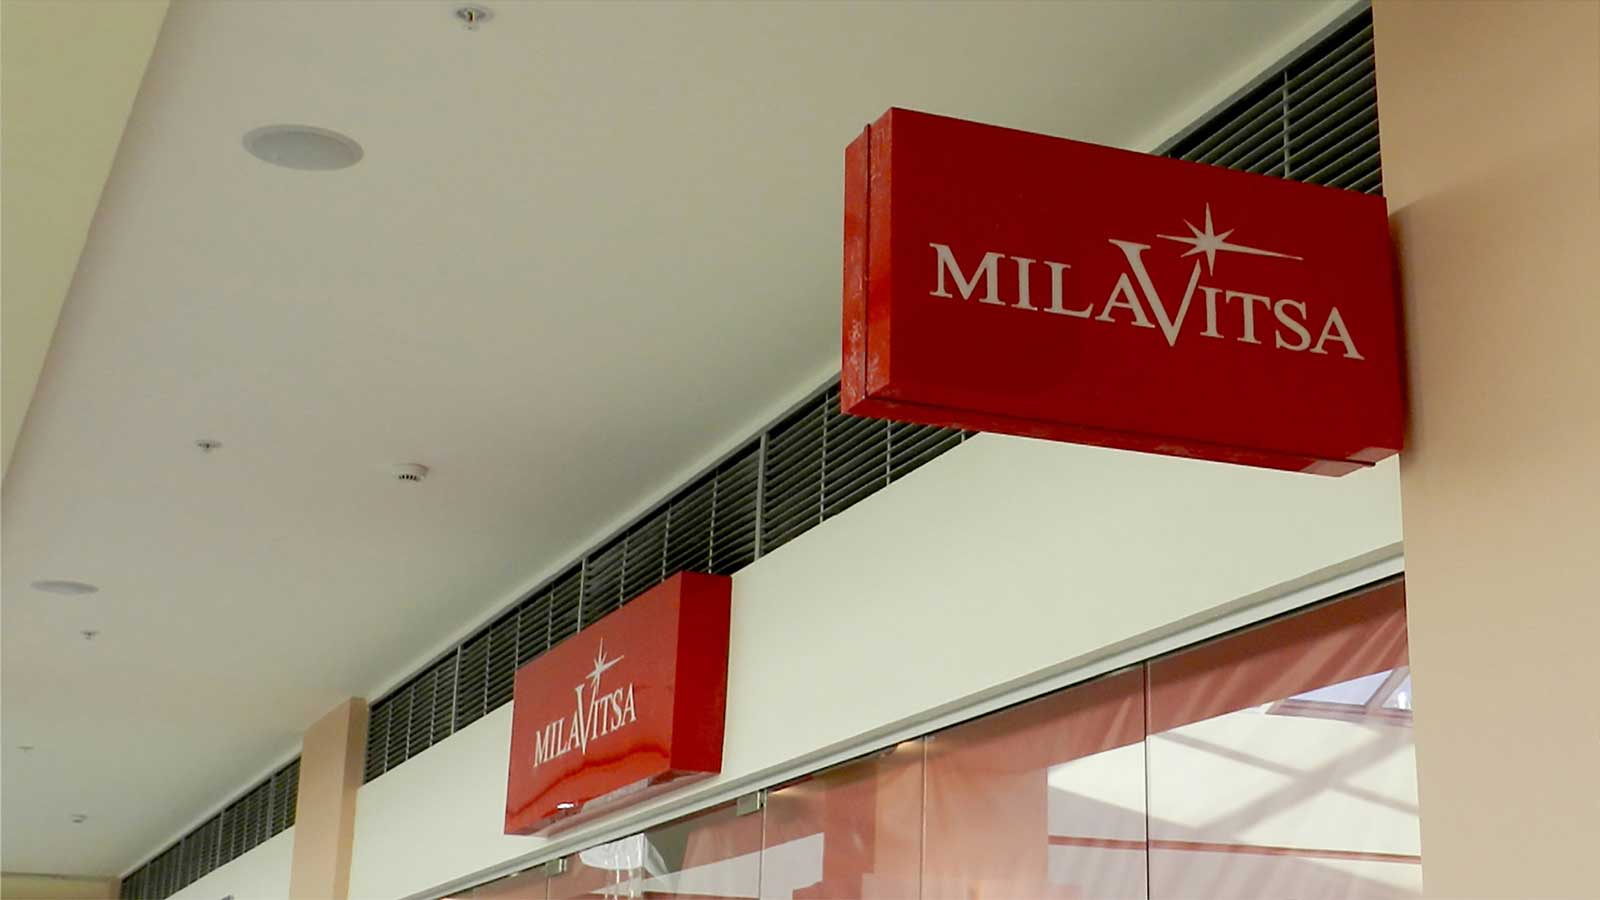 milavitsa indoor acrylic lightbox sign